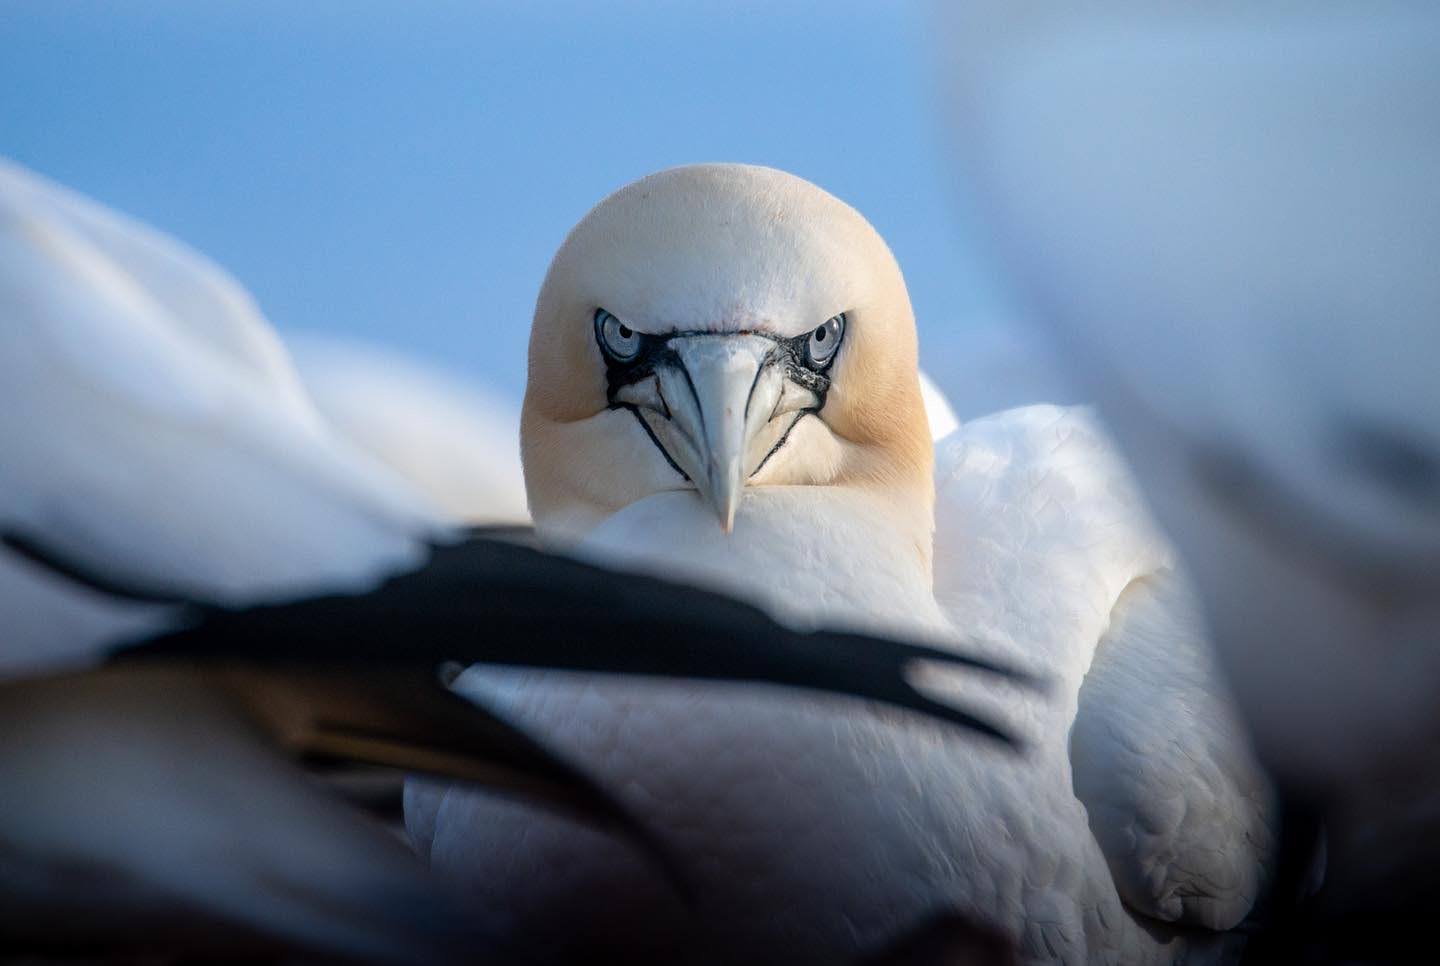 Mean looking gannet